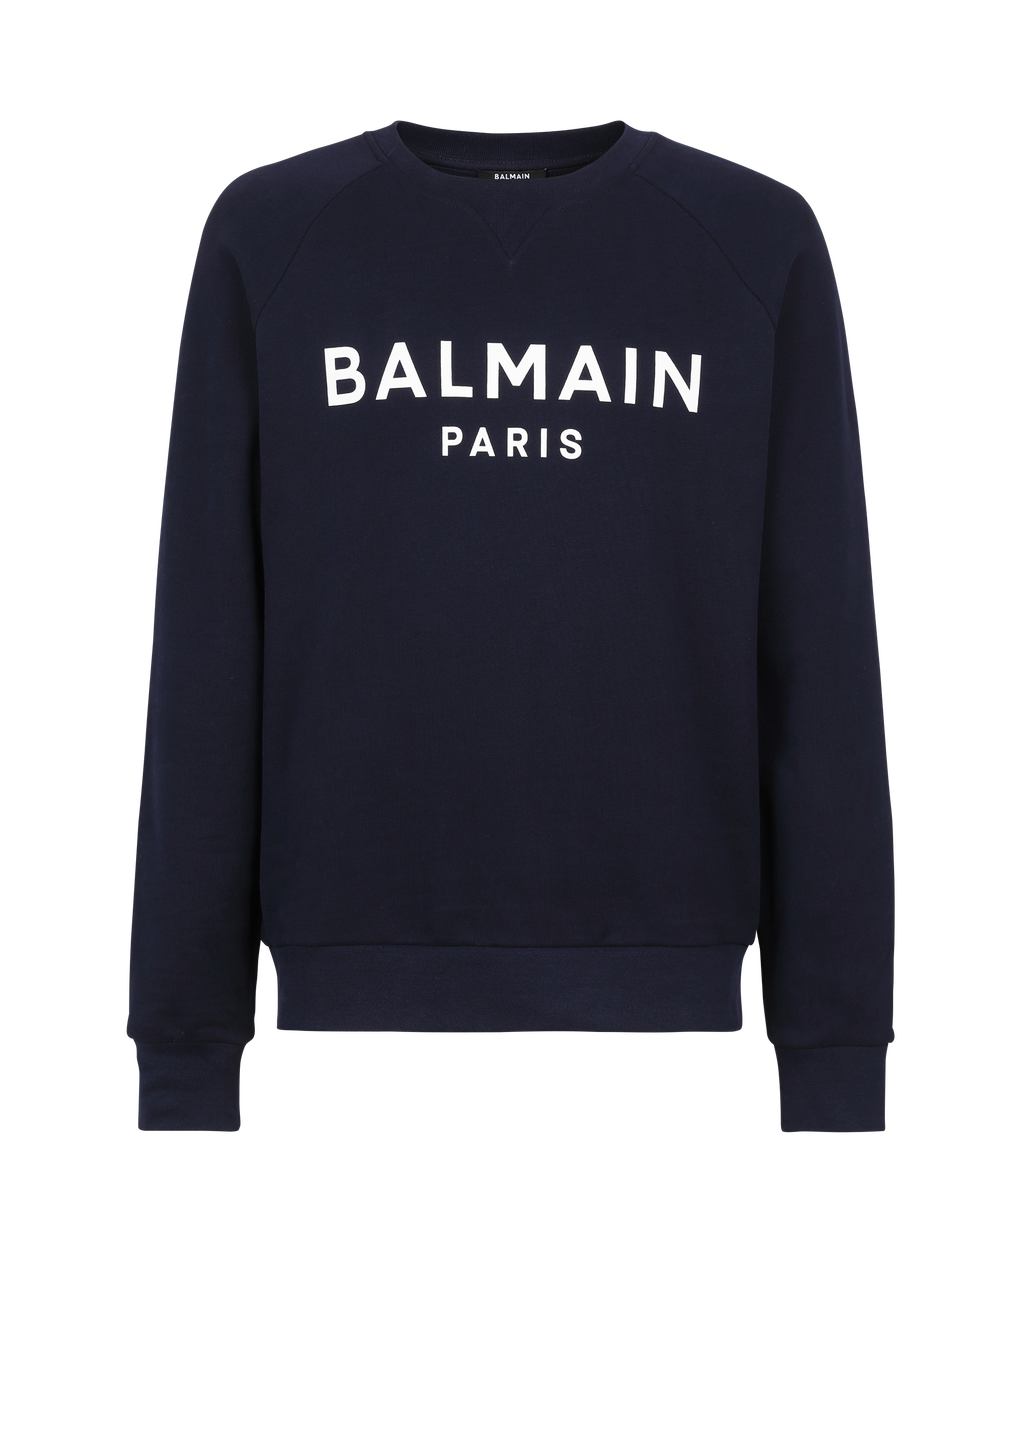 Cotton sweatshirt with flocked Balmain Paris logo, navy, hi-res